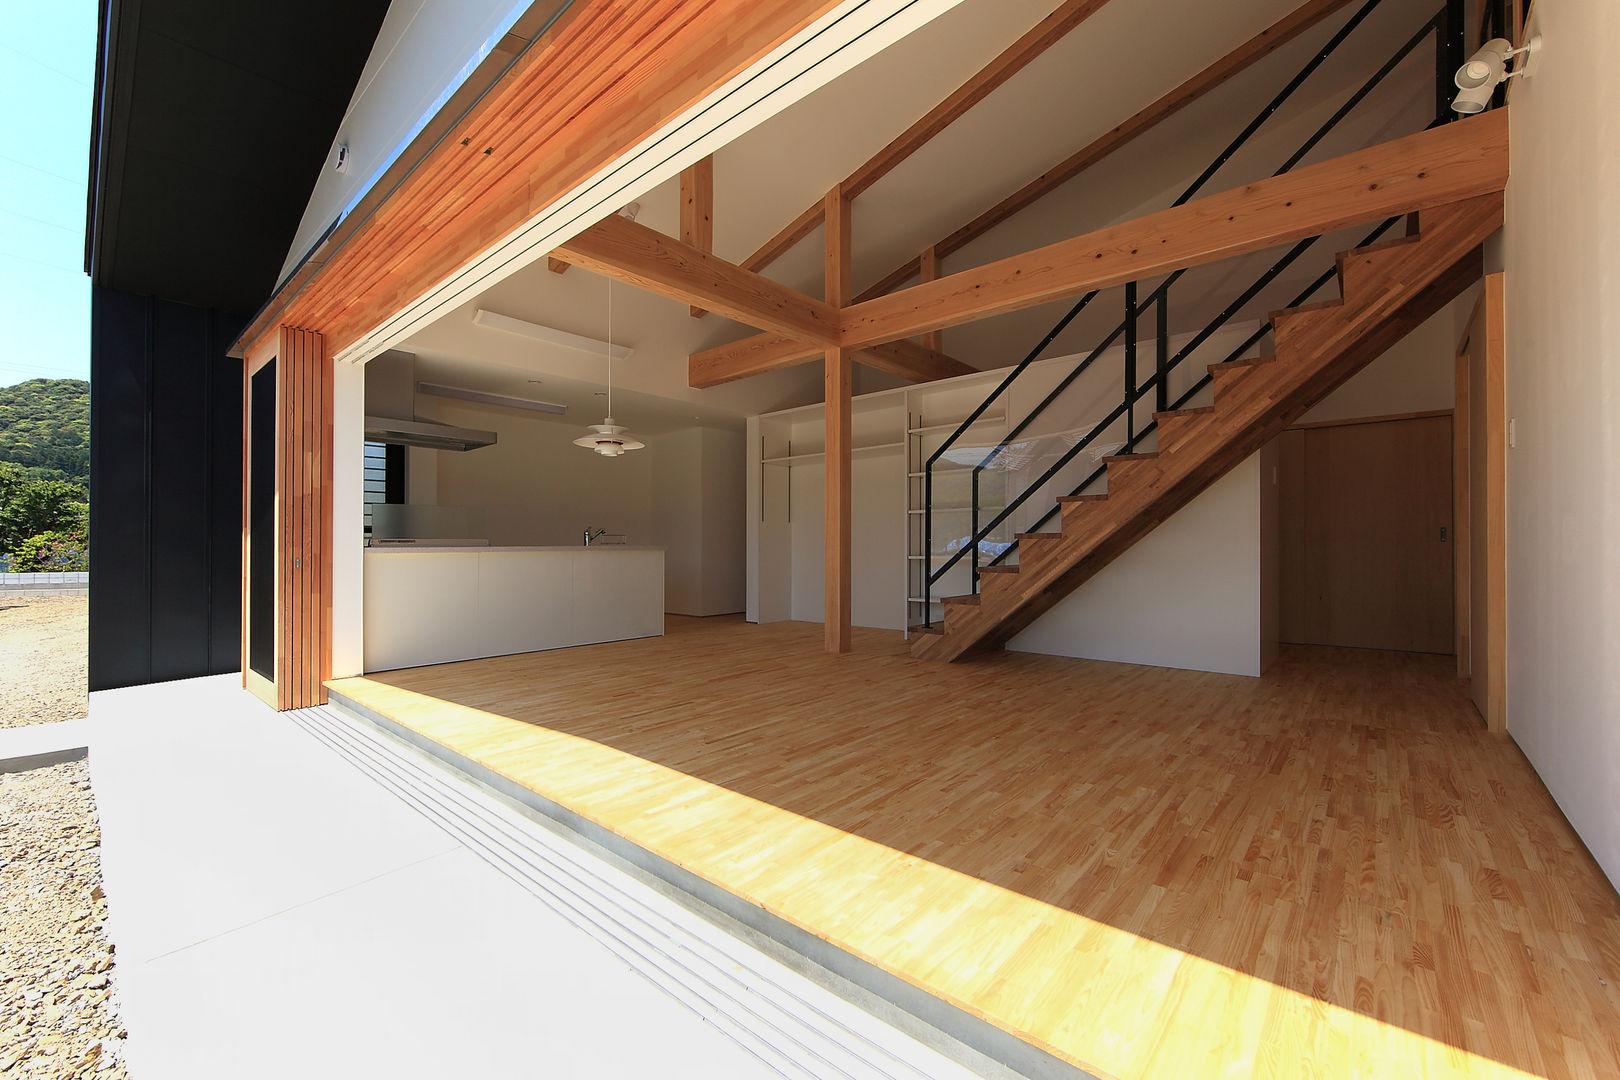 House-S【 ヒトツナガリノイエ 】, bound-design bound-design Casas modernas: Ideas, diseños y decoración